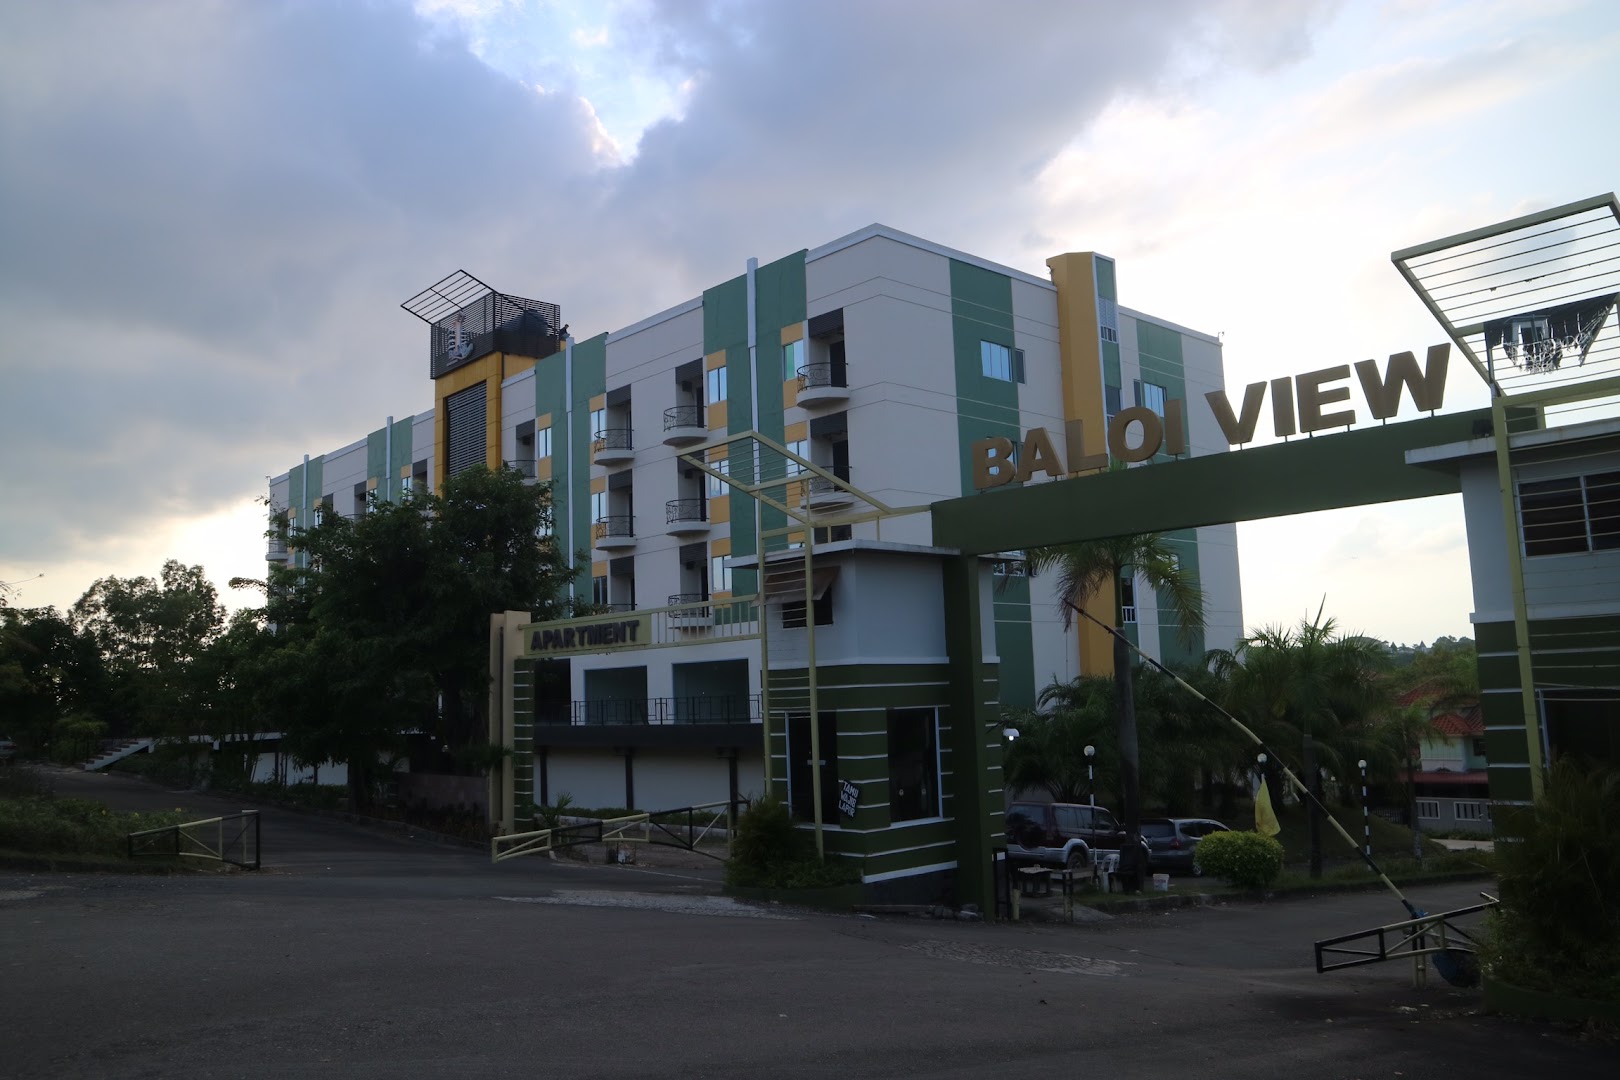 Gambar Baloi View Apartment